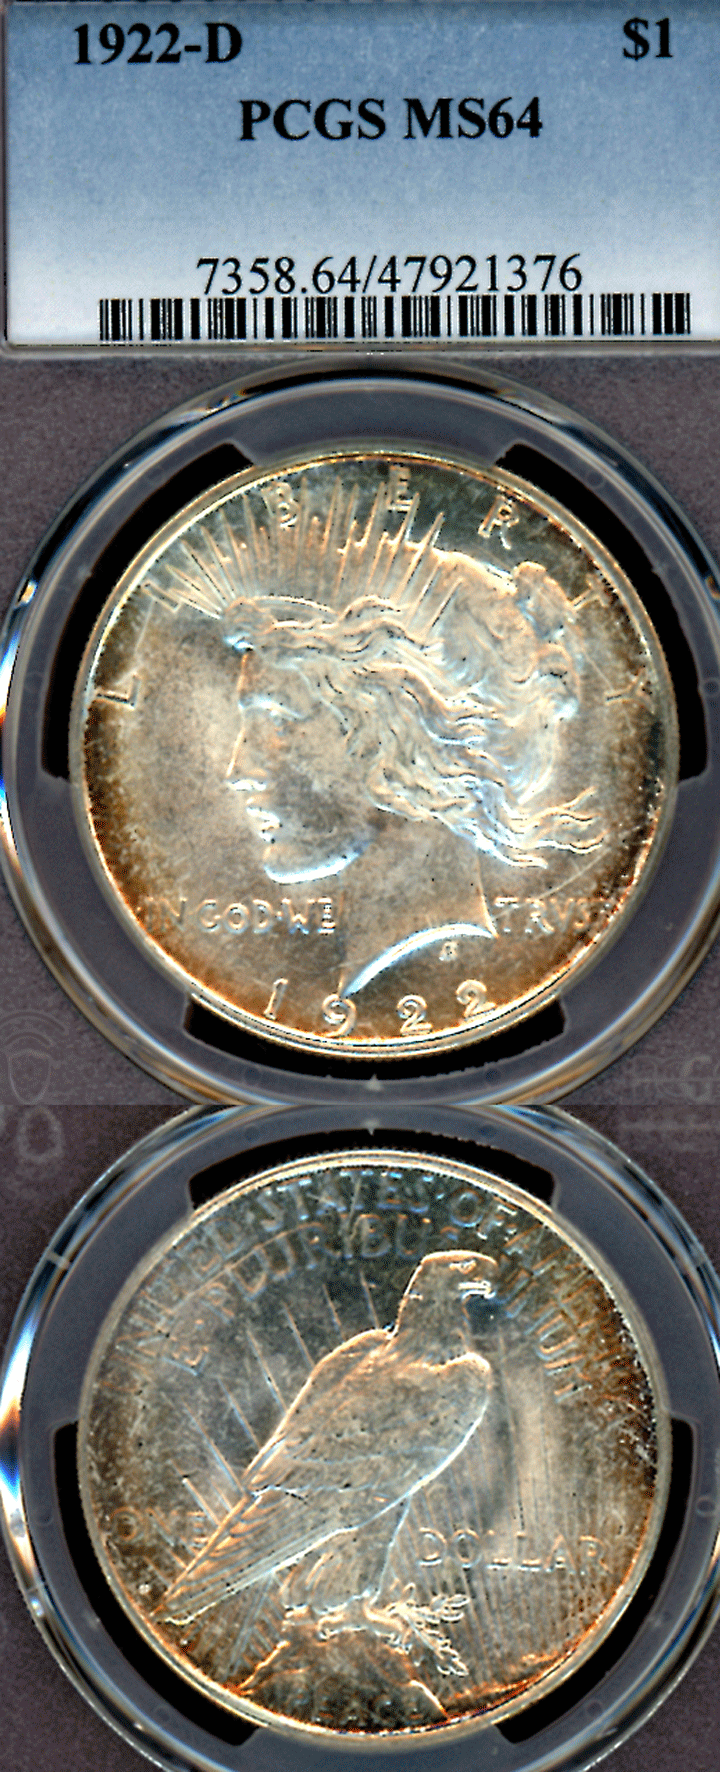 1922-D $ US Peace silver dollar PCGS MS64